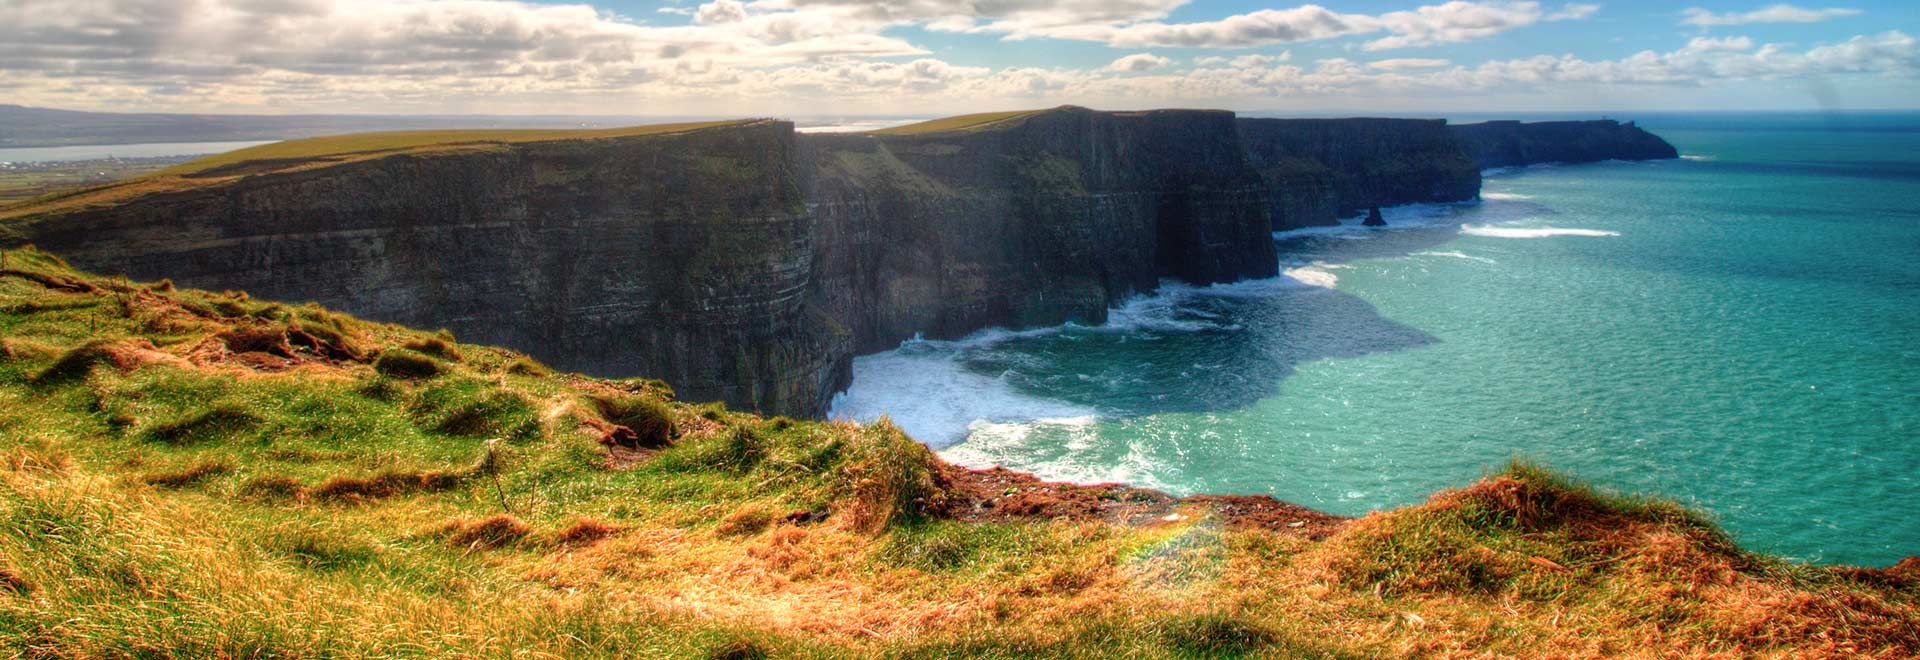 Europe Ireland Splendors Emerald Isle Cliffs Moher mh